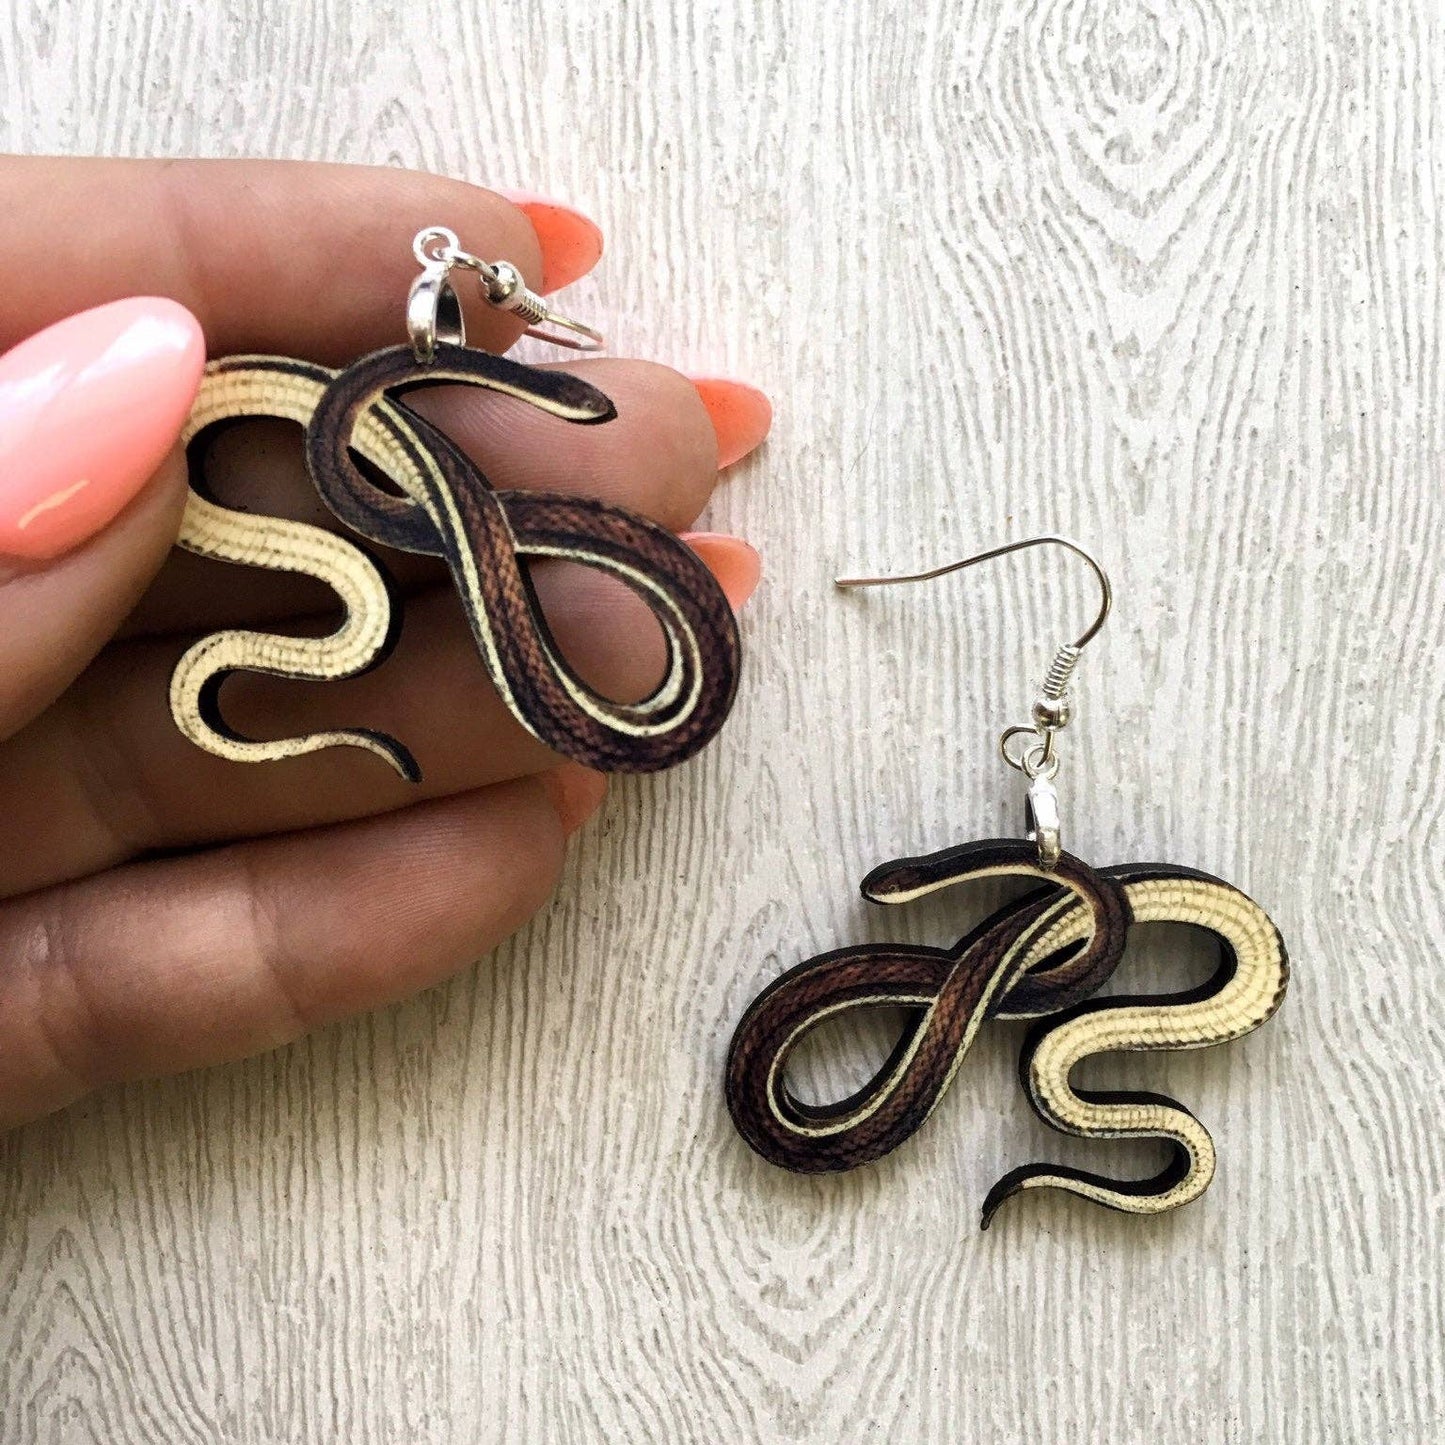 Garter Snake Earrings - Antique Image - Laser Cut Wood